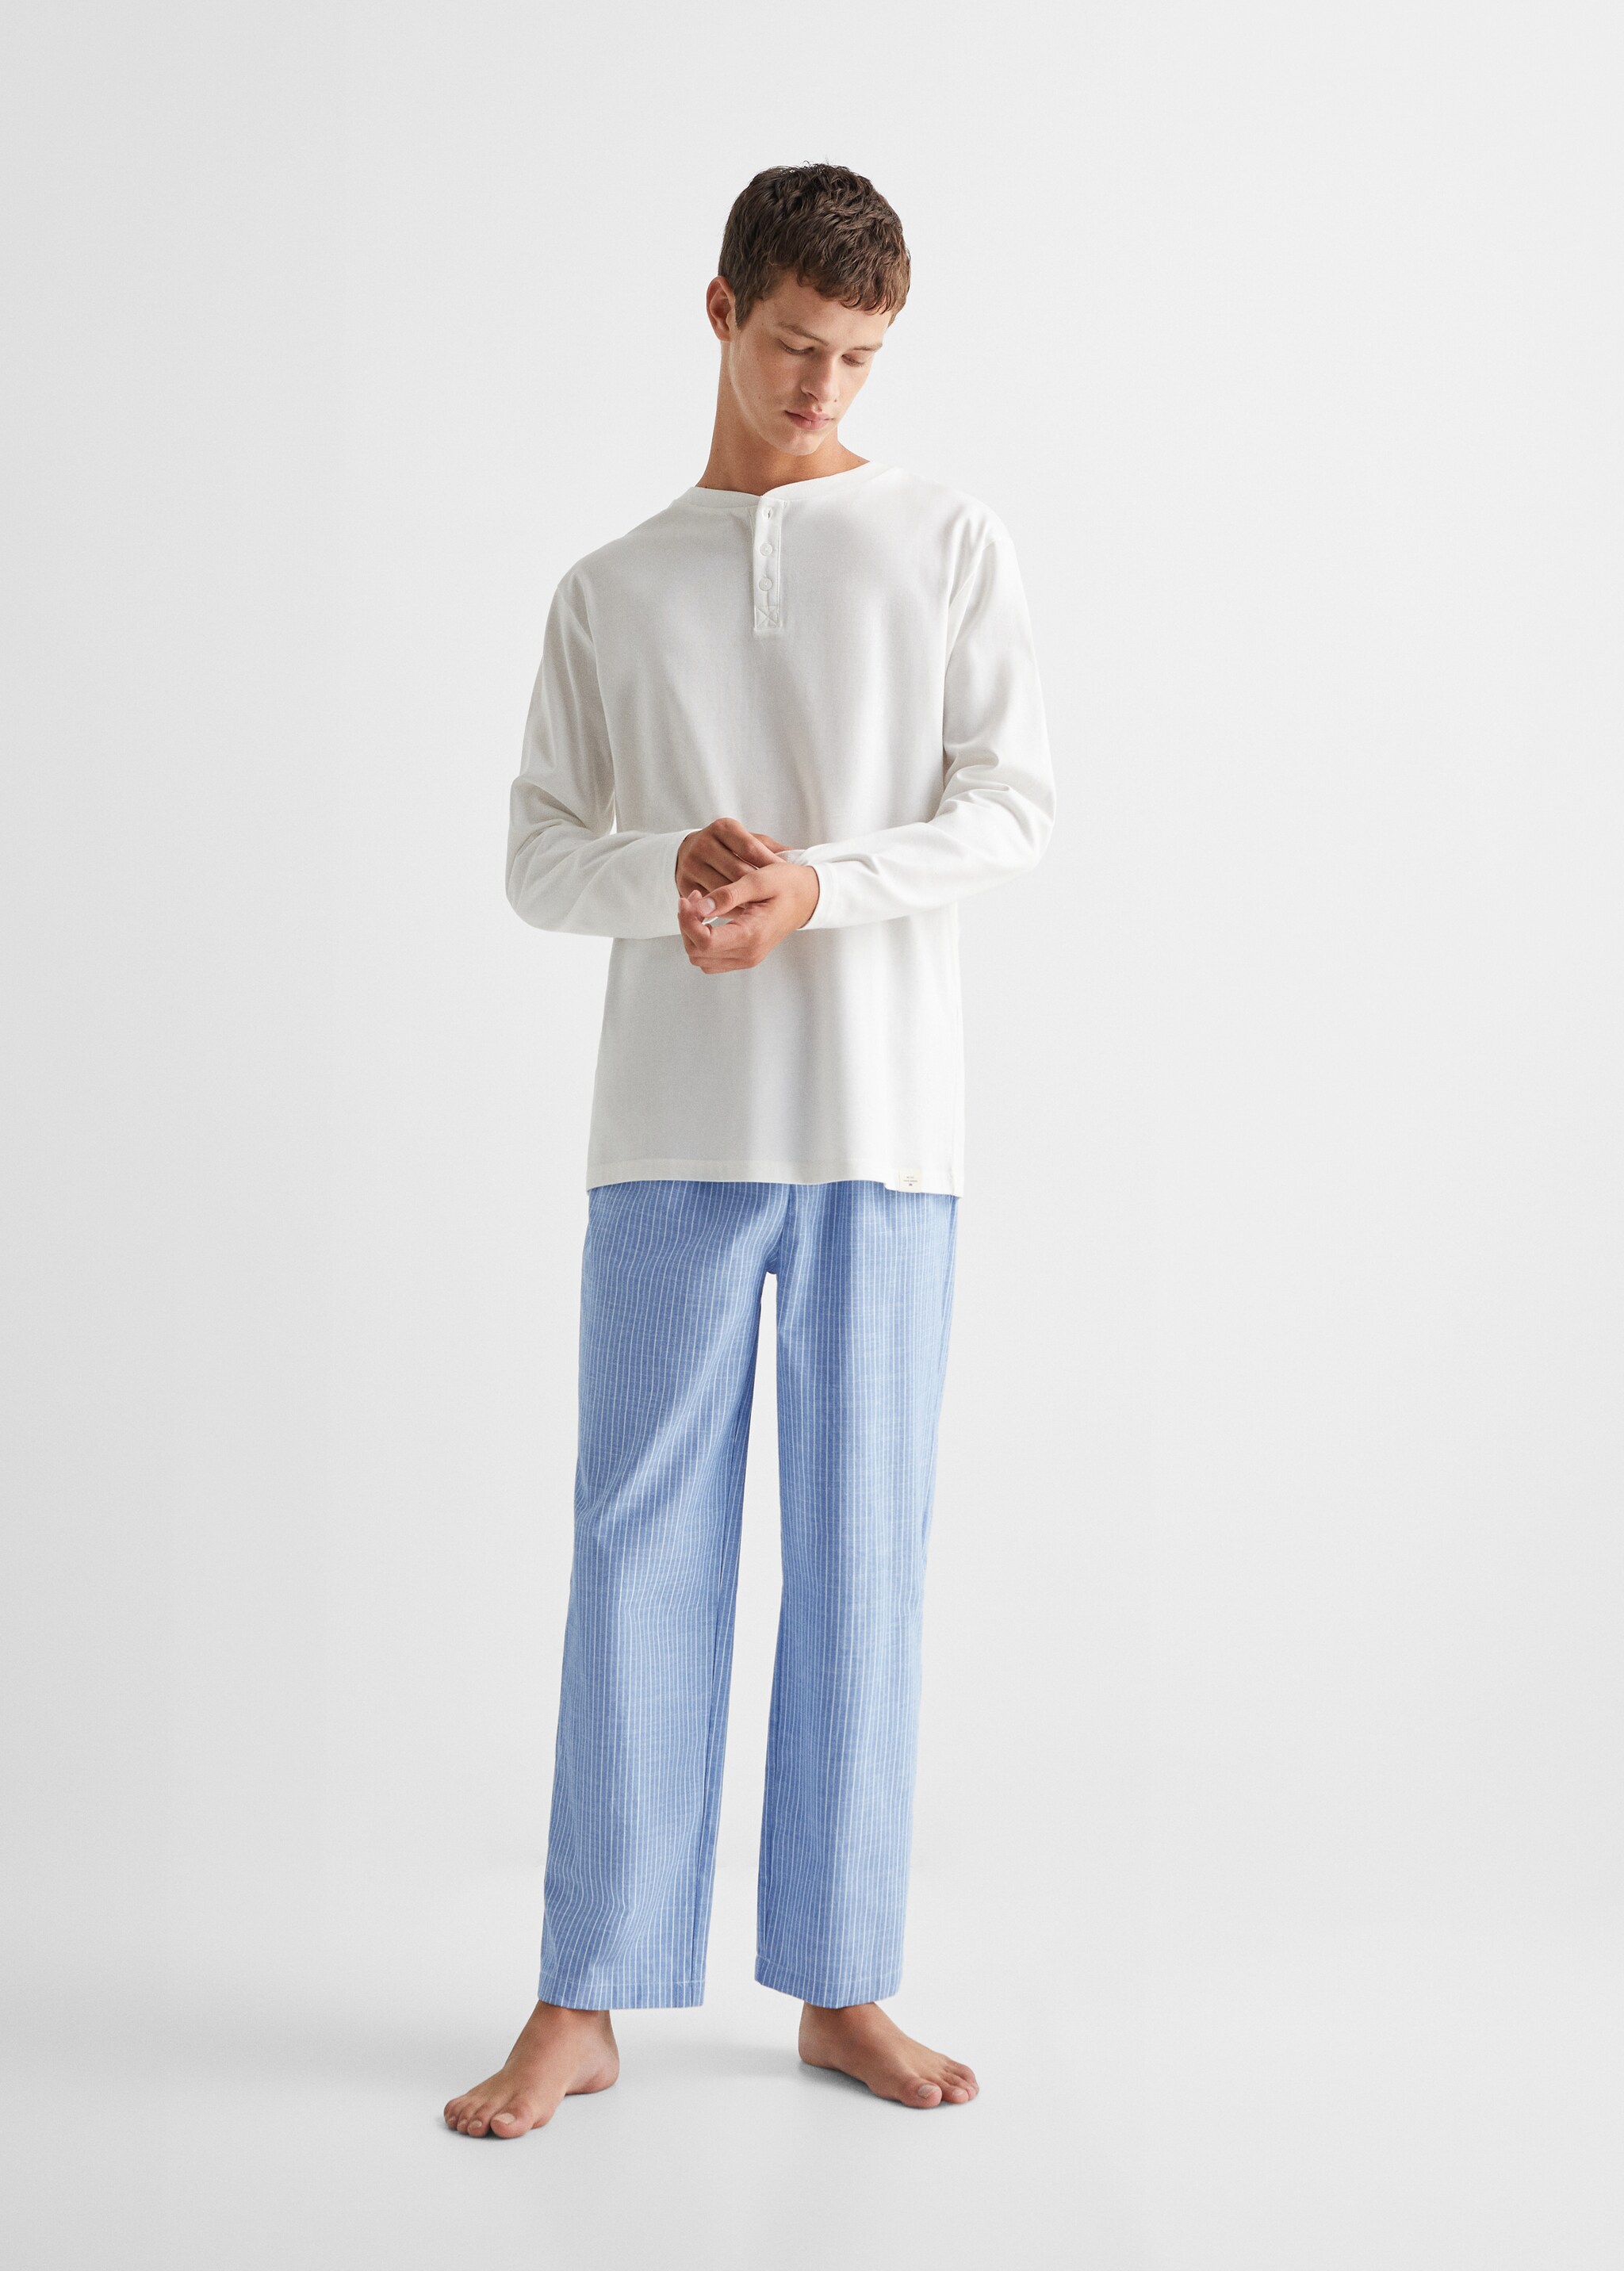 Pijama llarg ratlles - Pla general